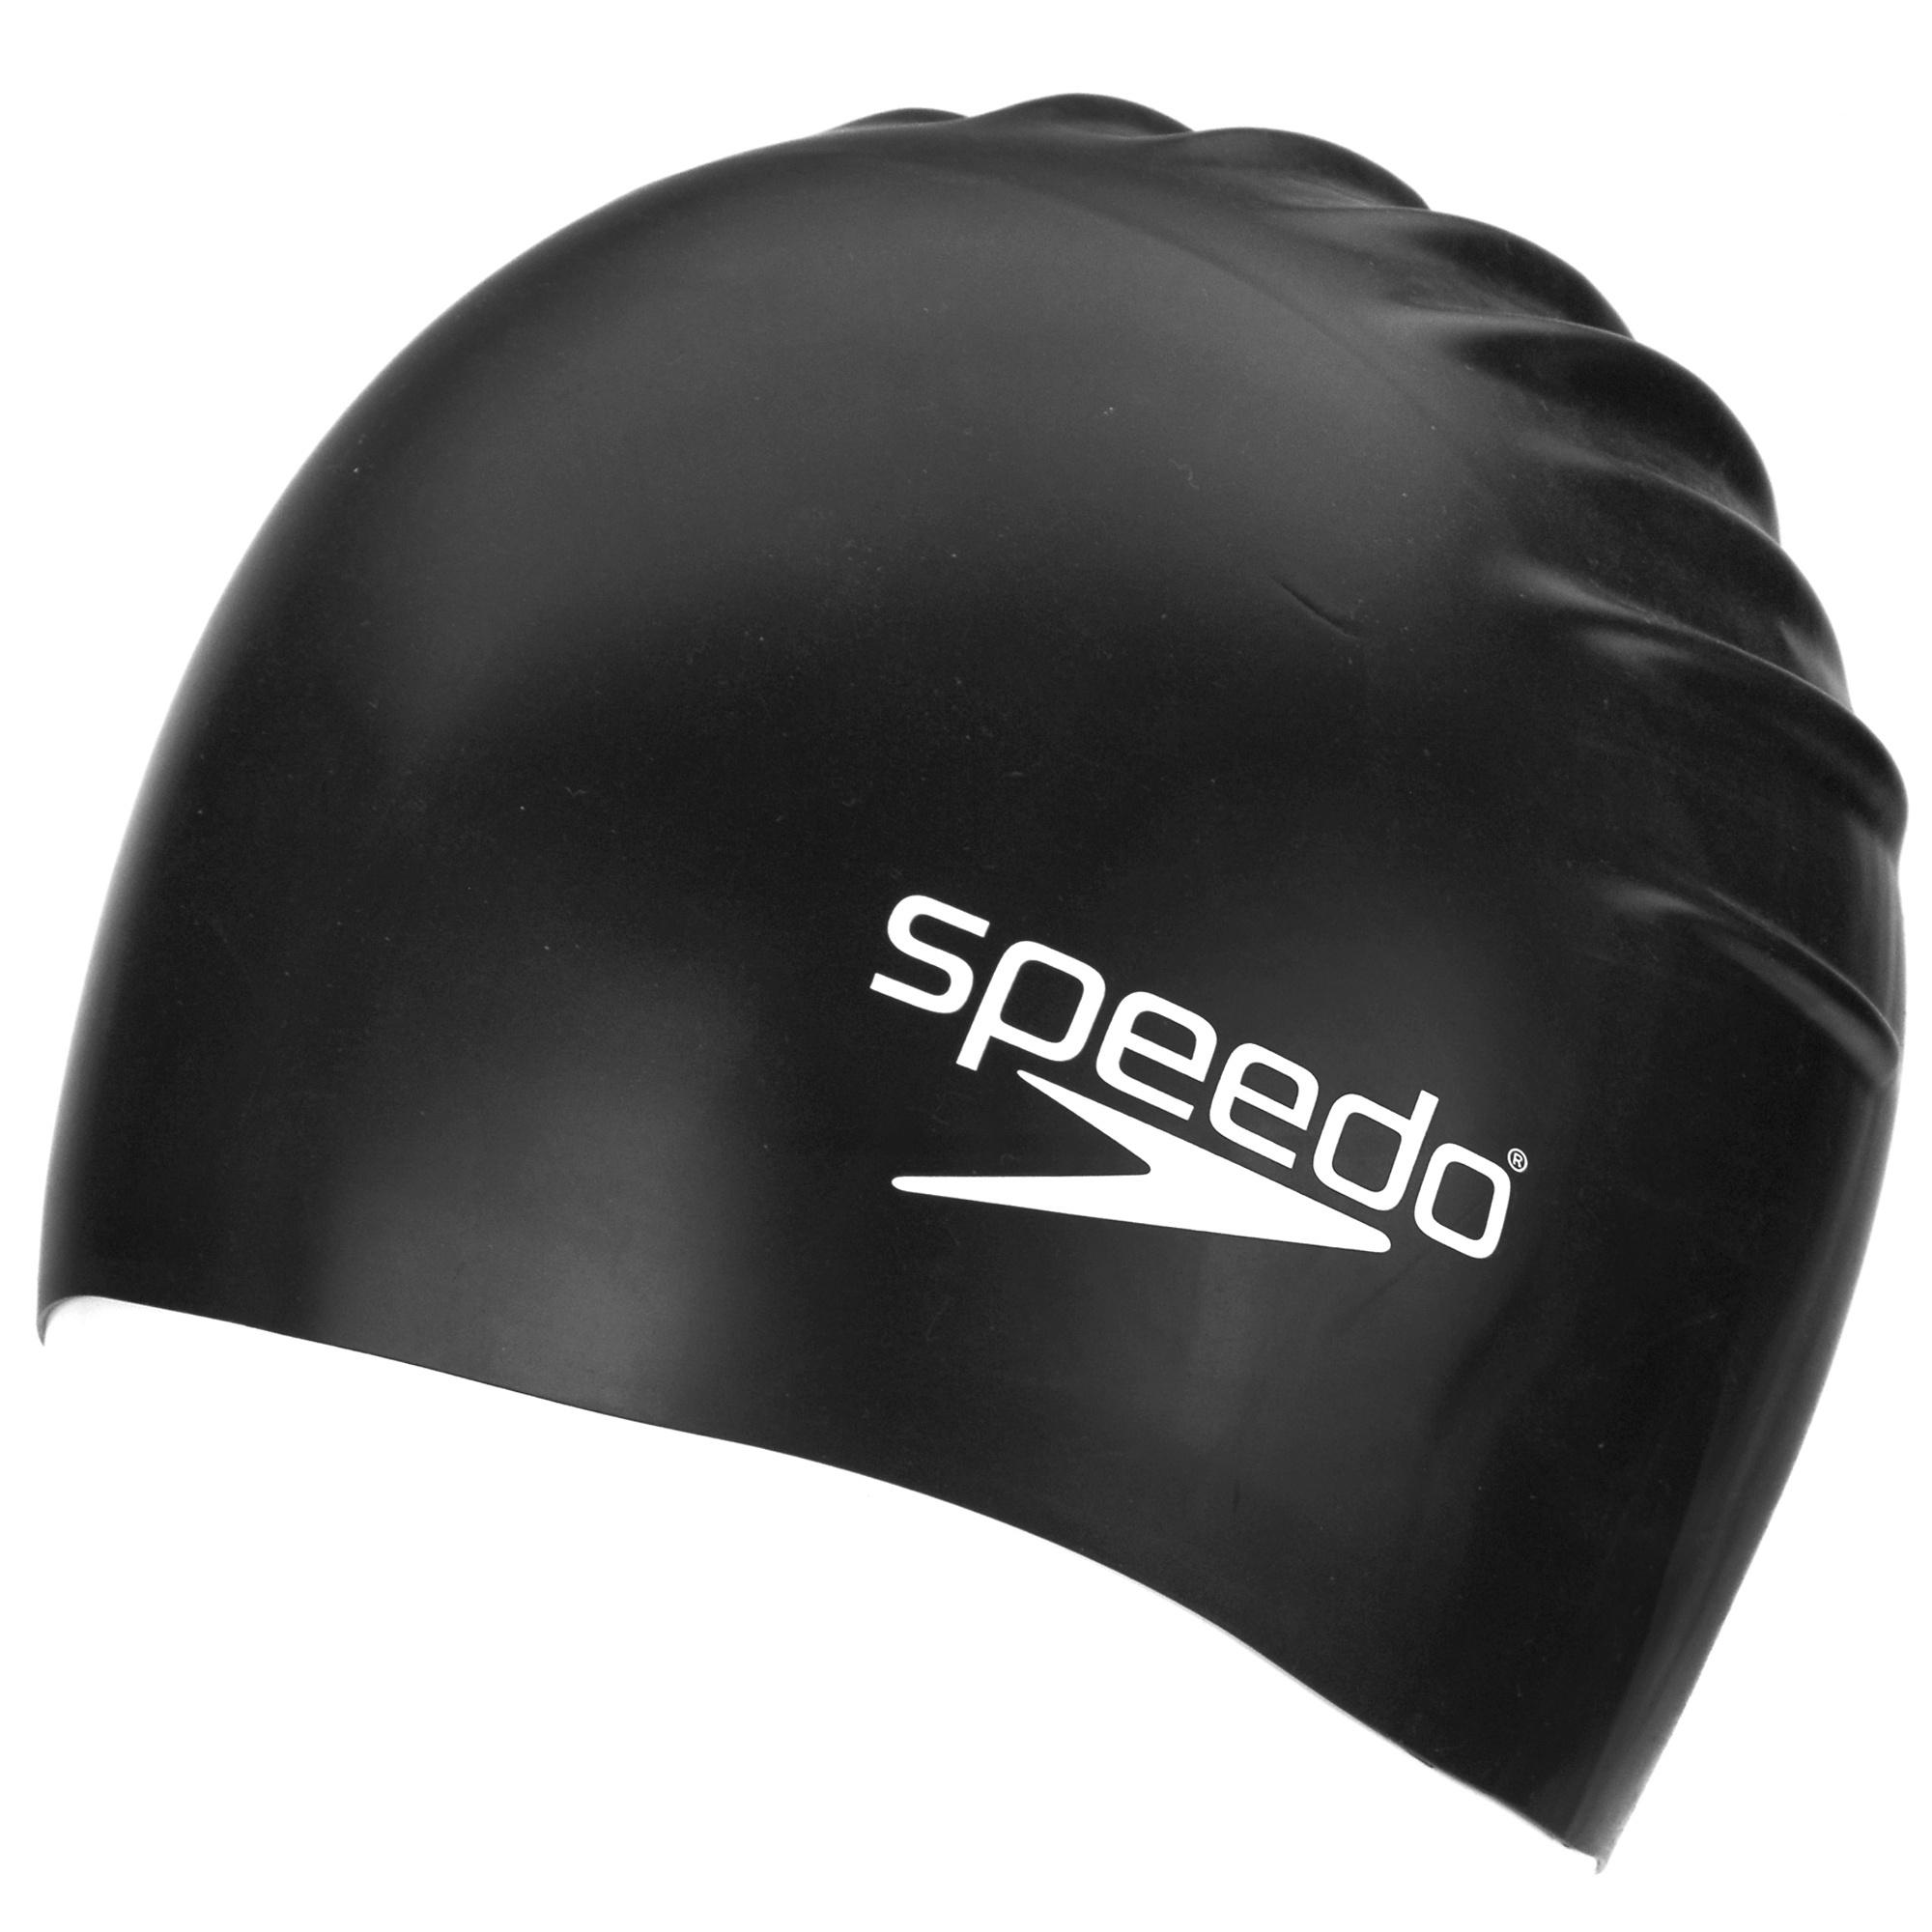 Speedo Swim Hat Online Shop, UP TO 62% OFF | www.ldeventos.com